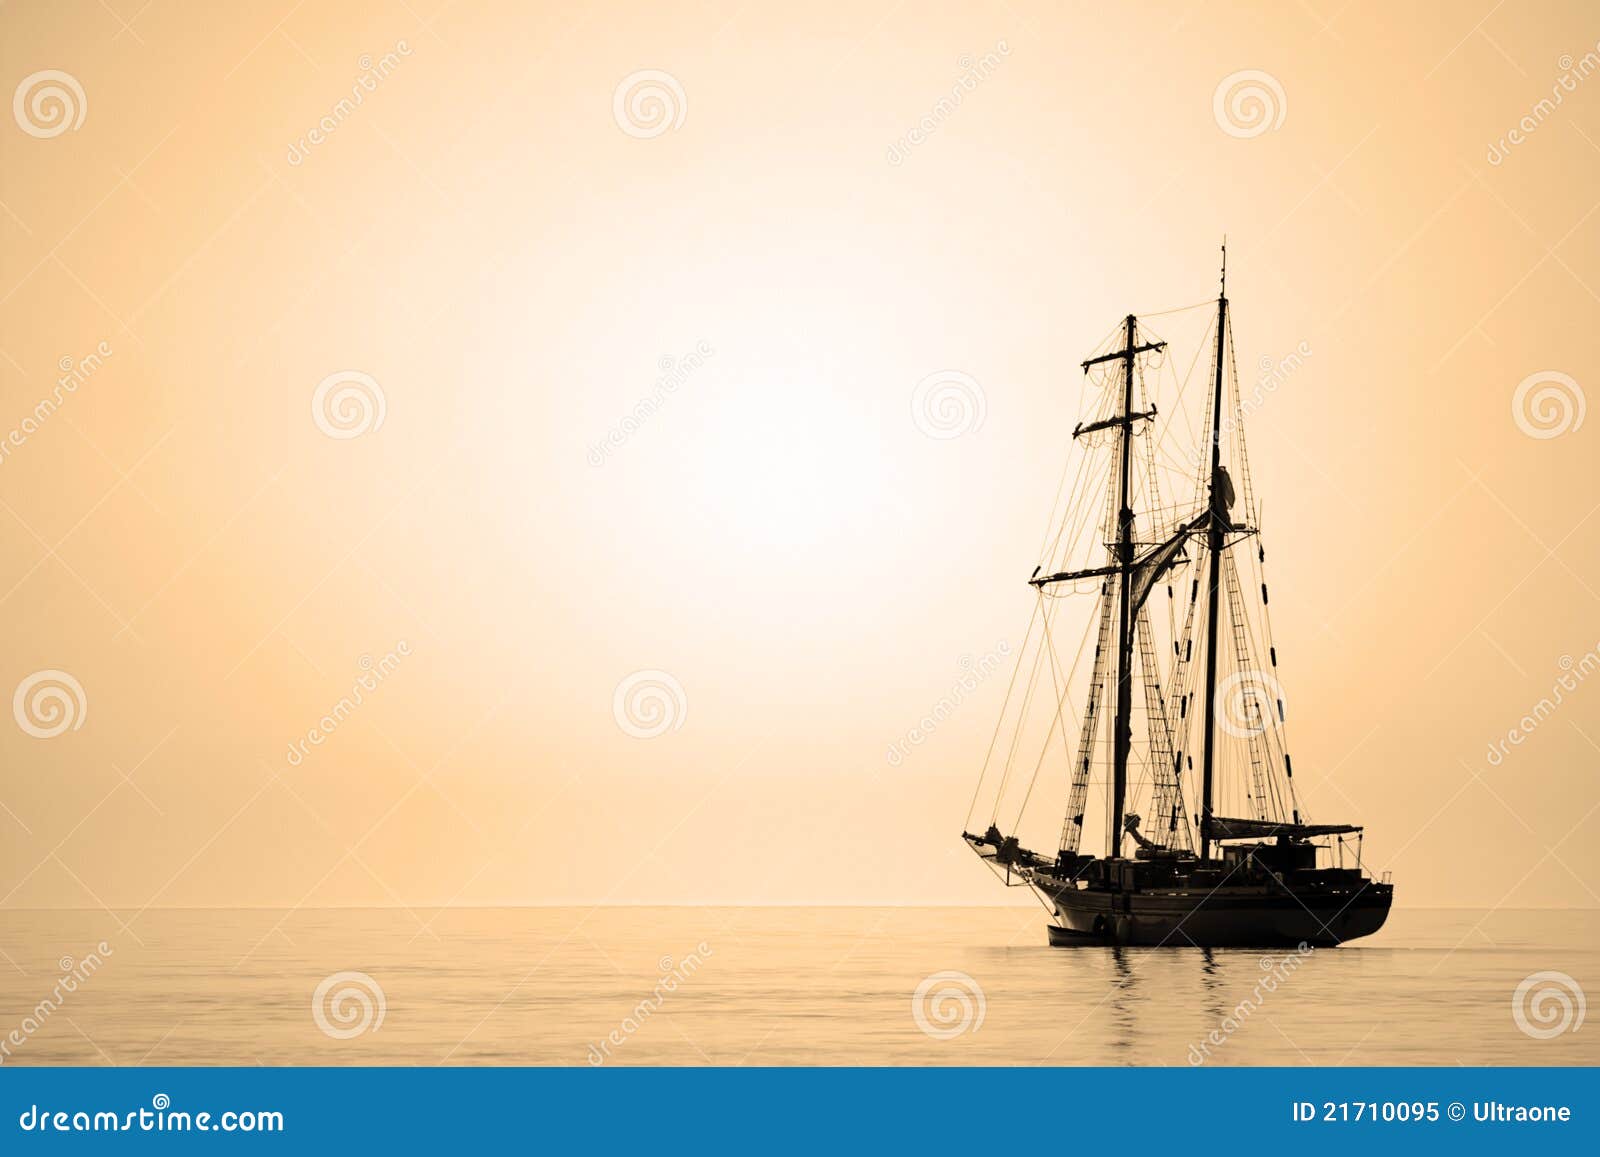 sailing ship sepia toned.